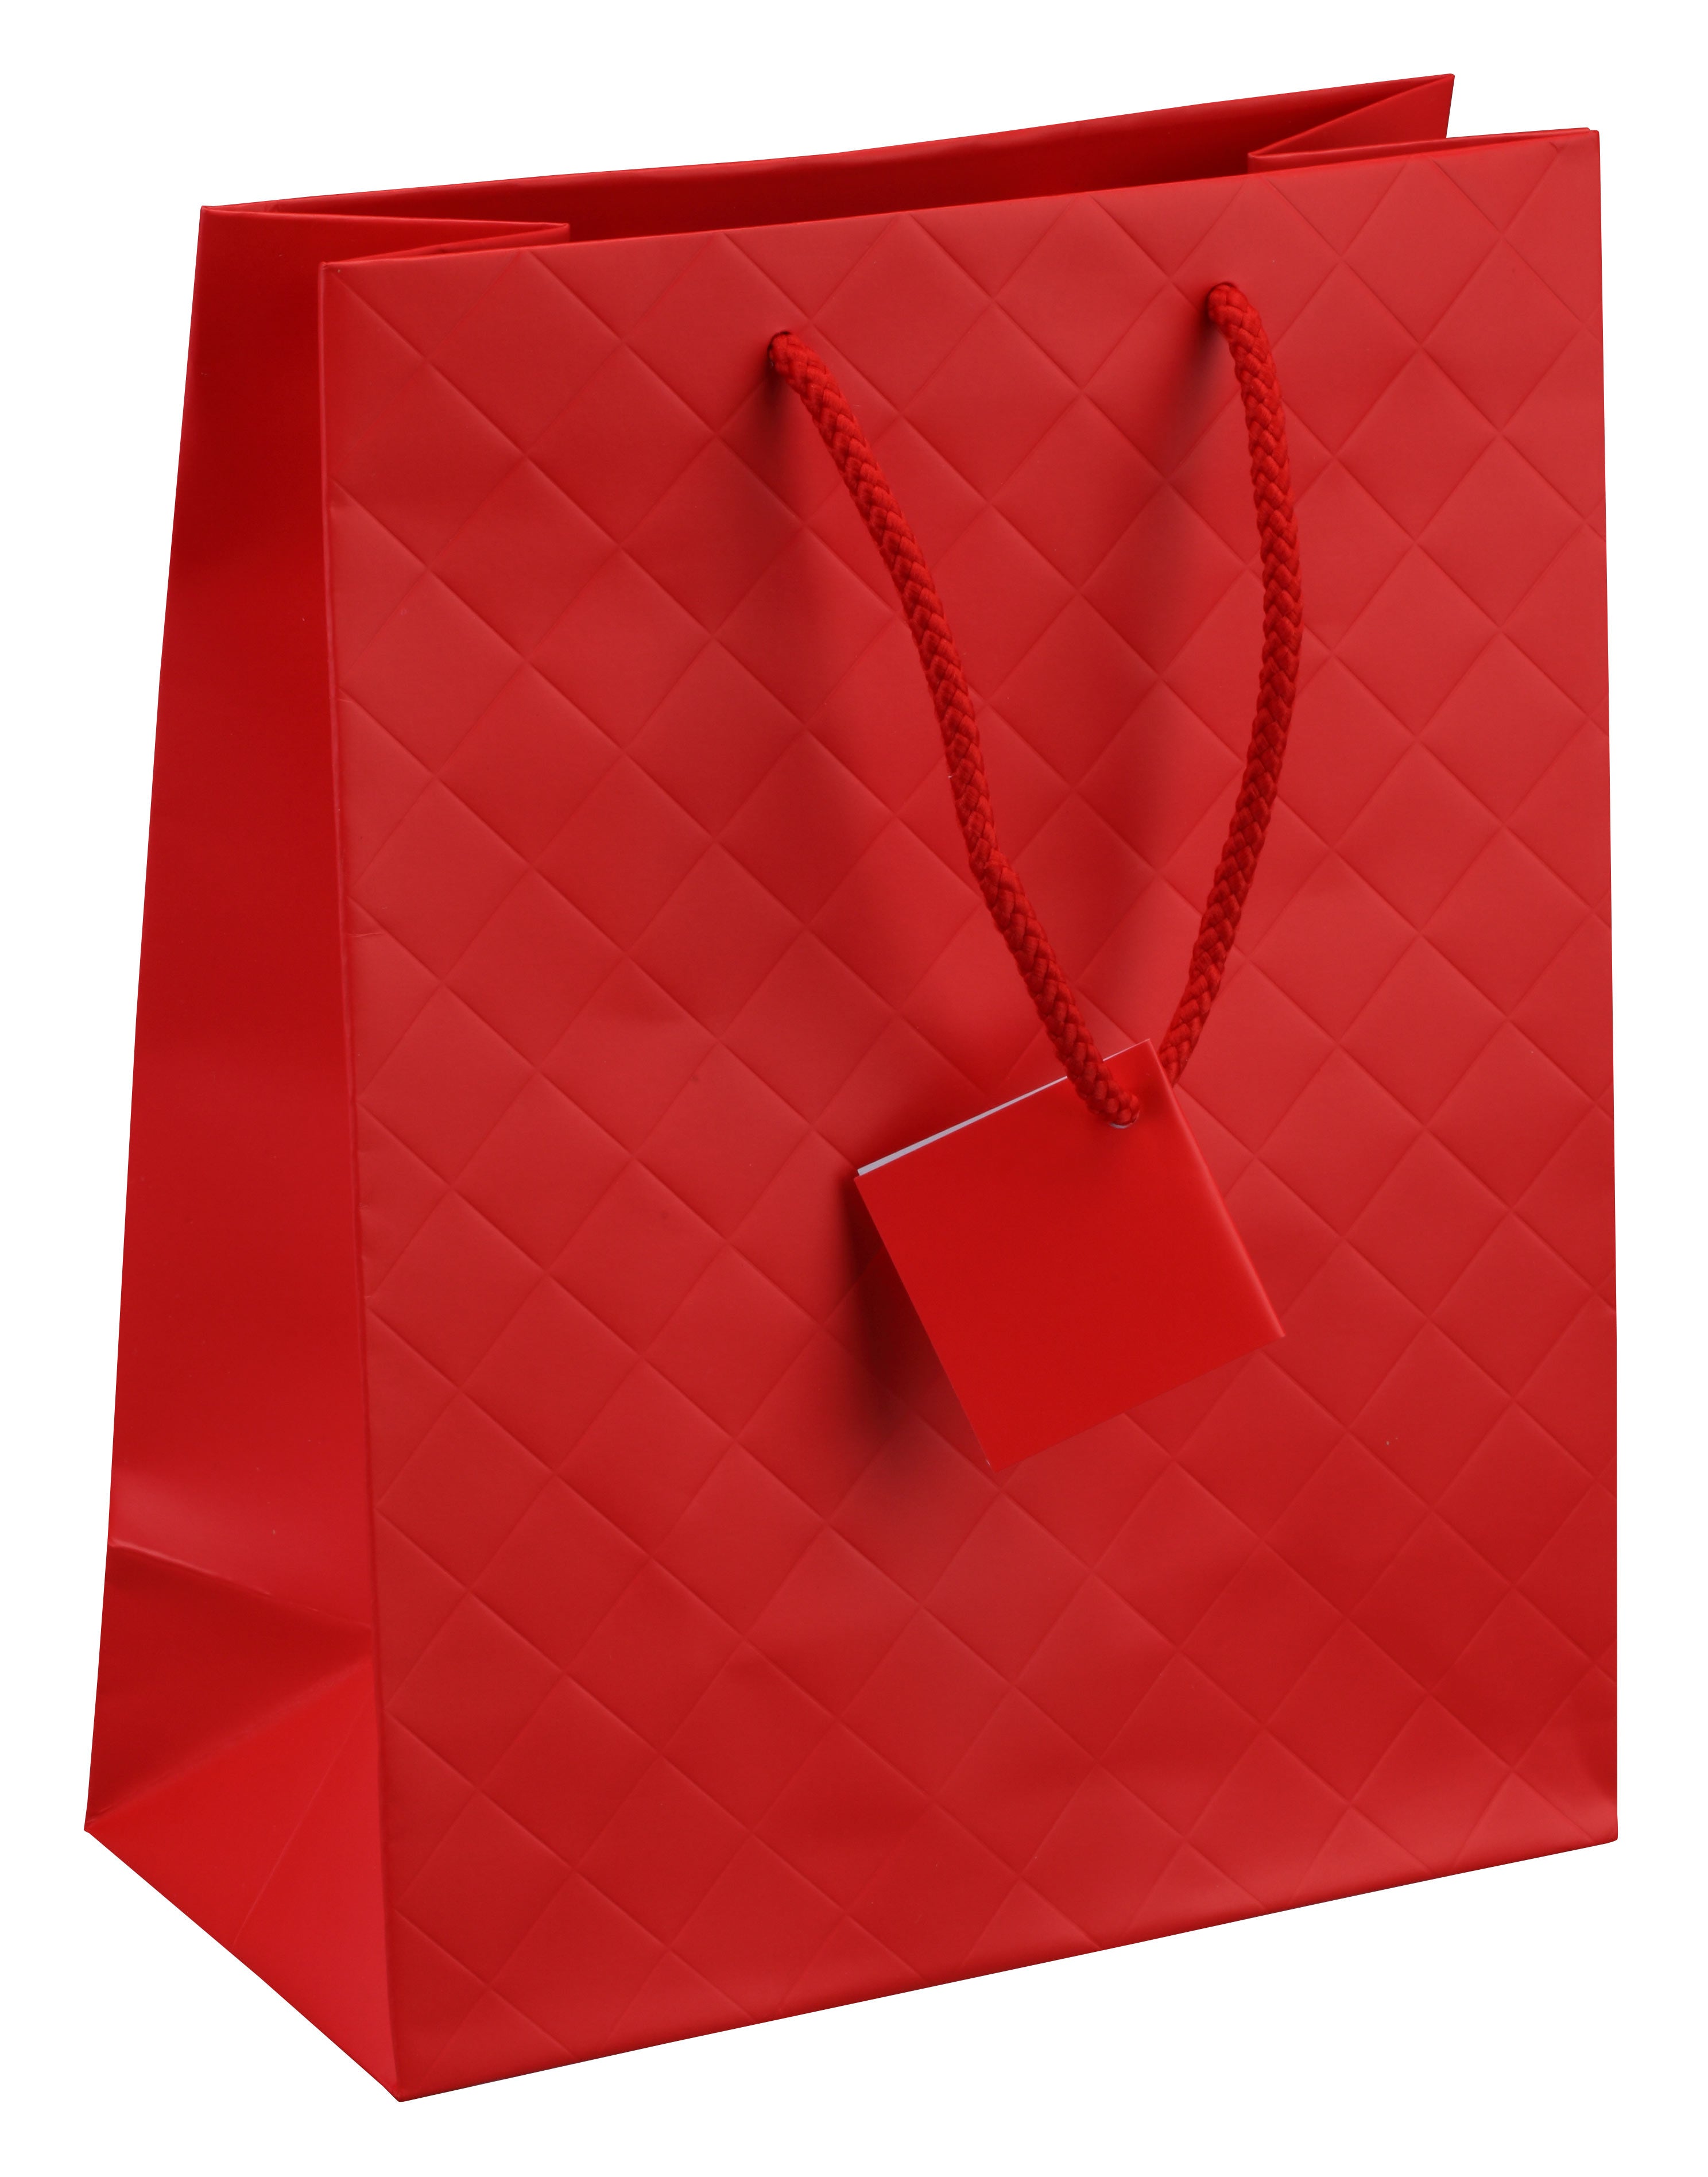 Tote-Style Gift Bags in Crimson Matelassé